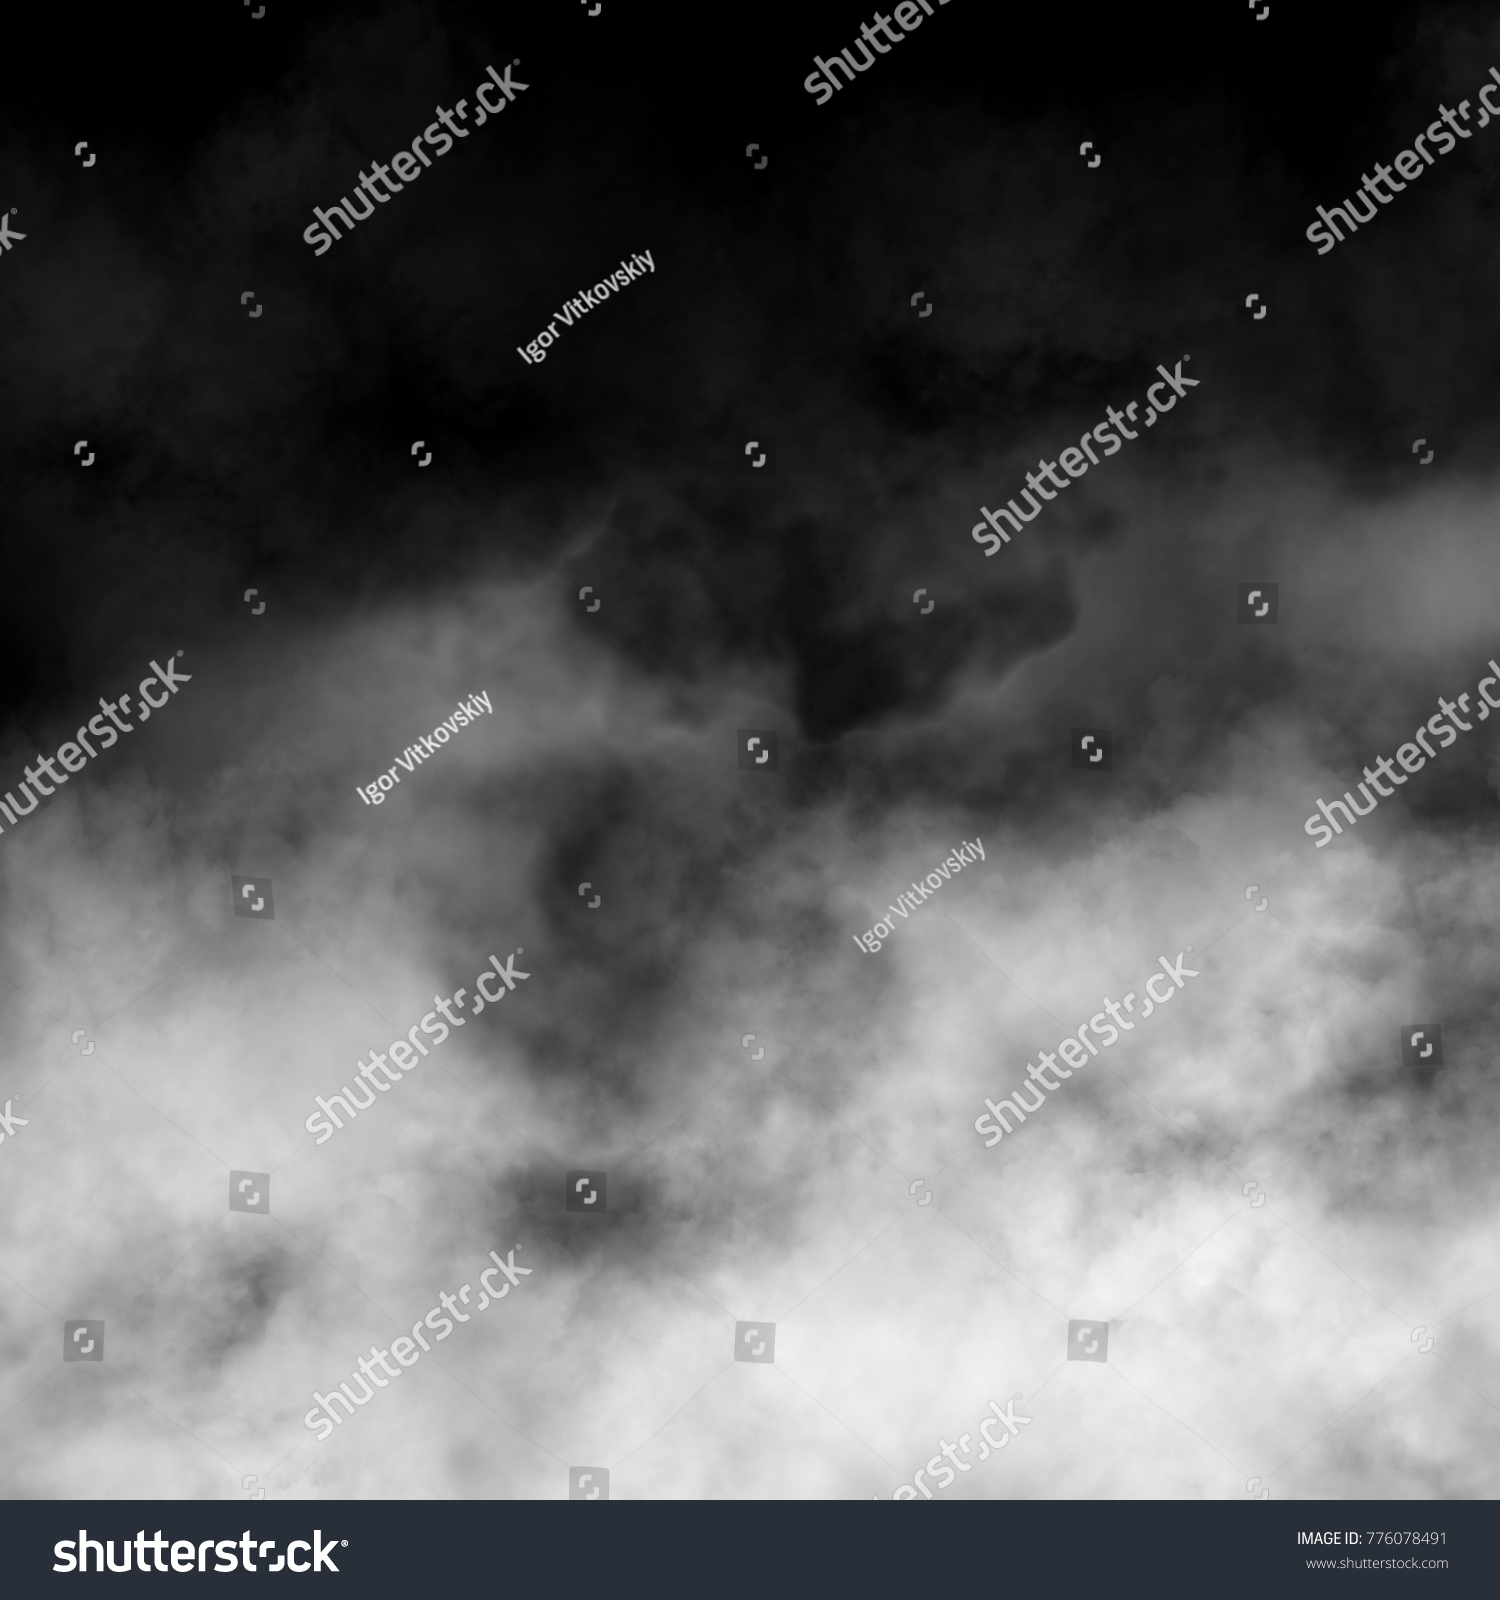 Fog, smoke and mist effect on black background. #776078491